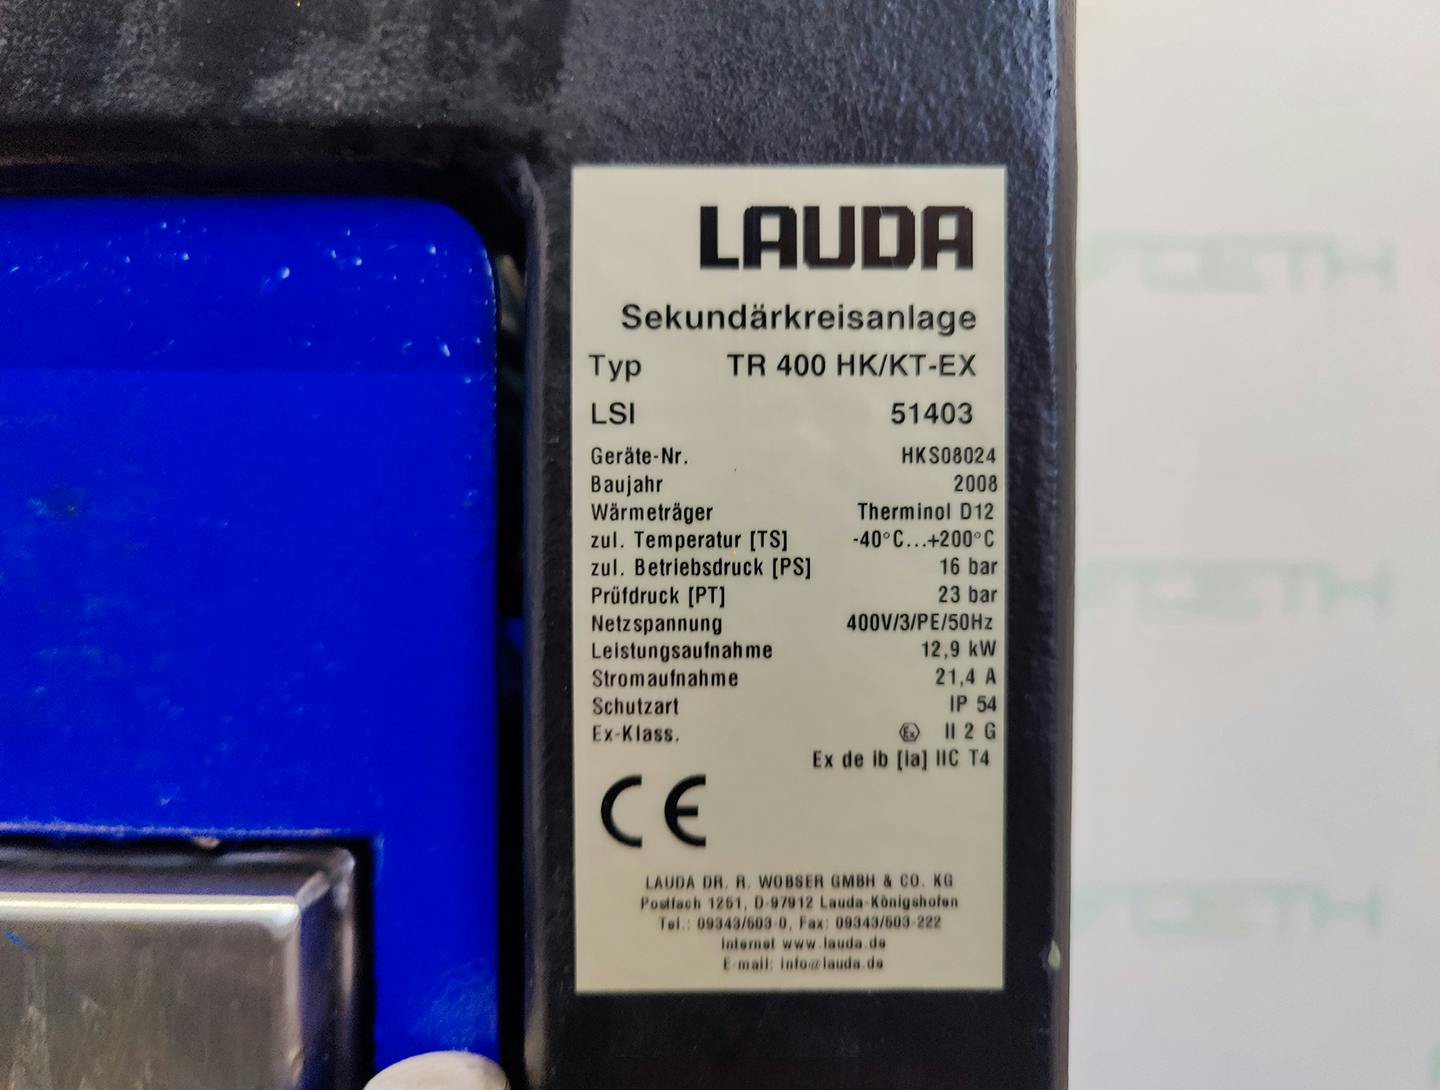 Lauda TR400 HK/KT-EX "secondary circuit system" - циркуляционный термостат - image 5